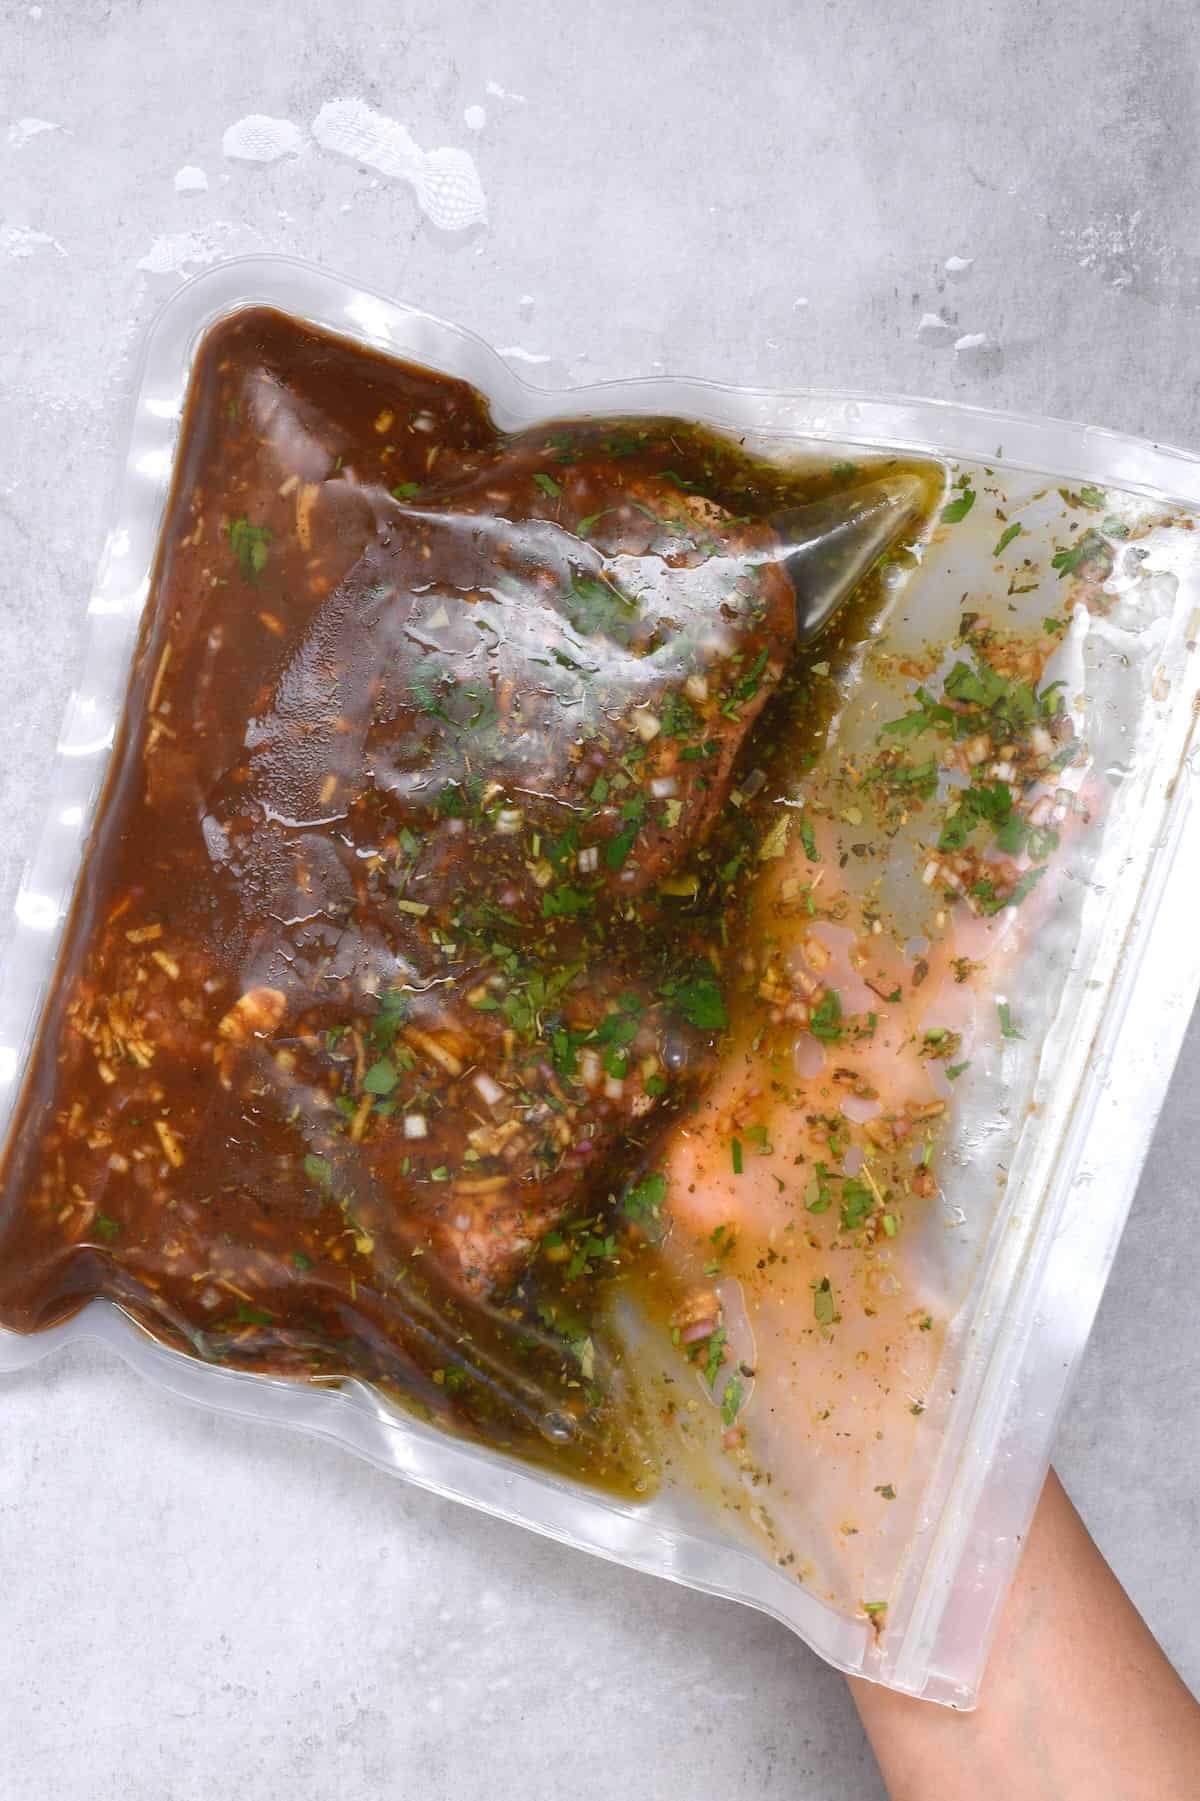 Marinating steak in a reusable bag